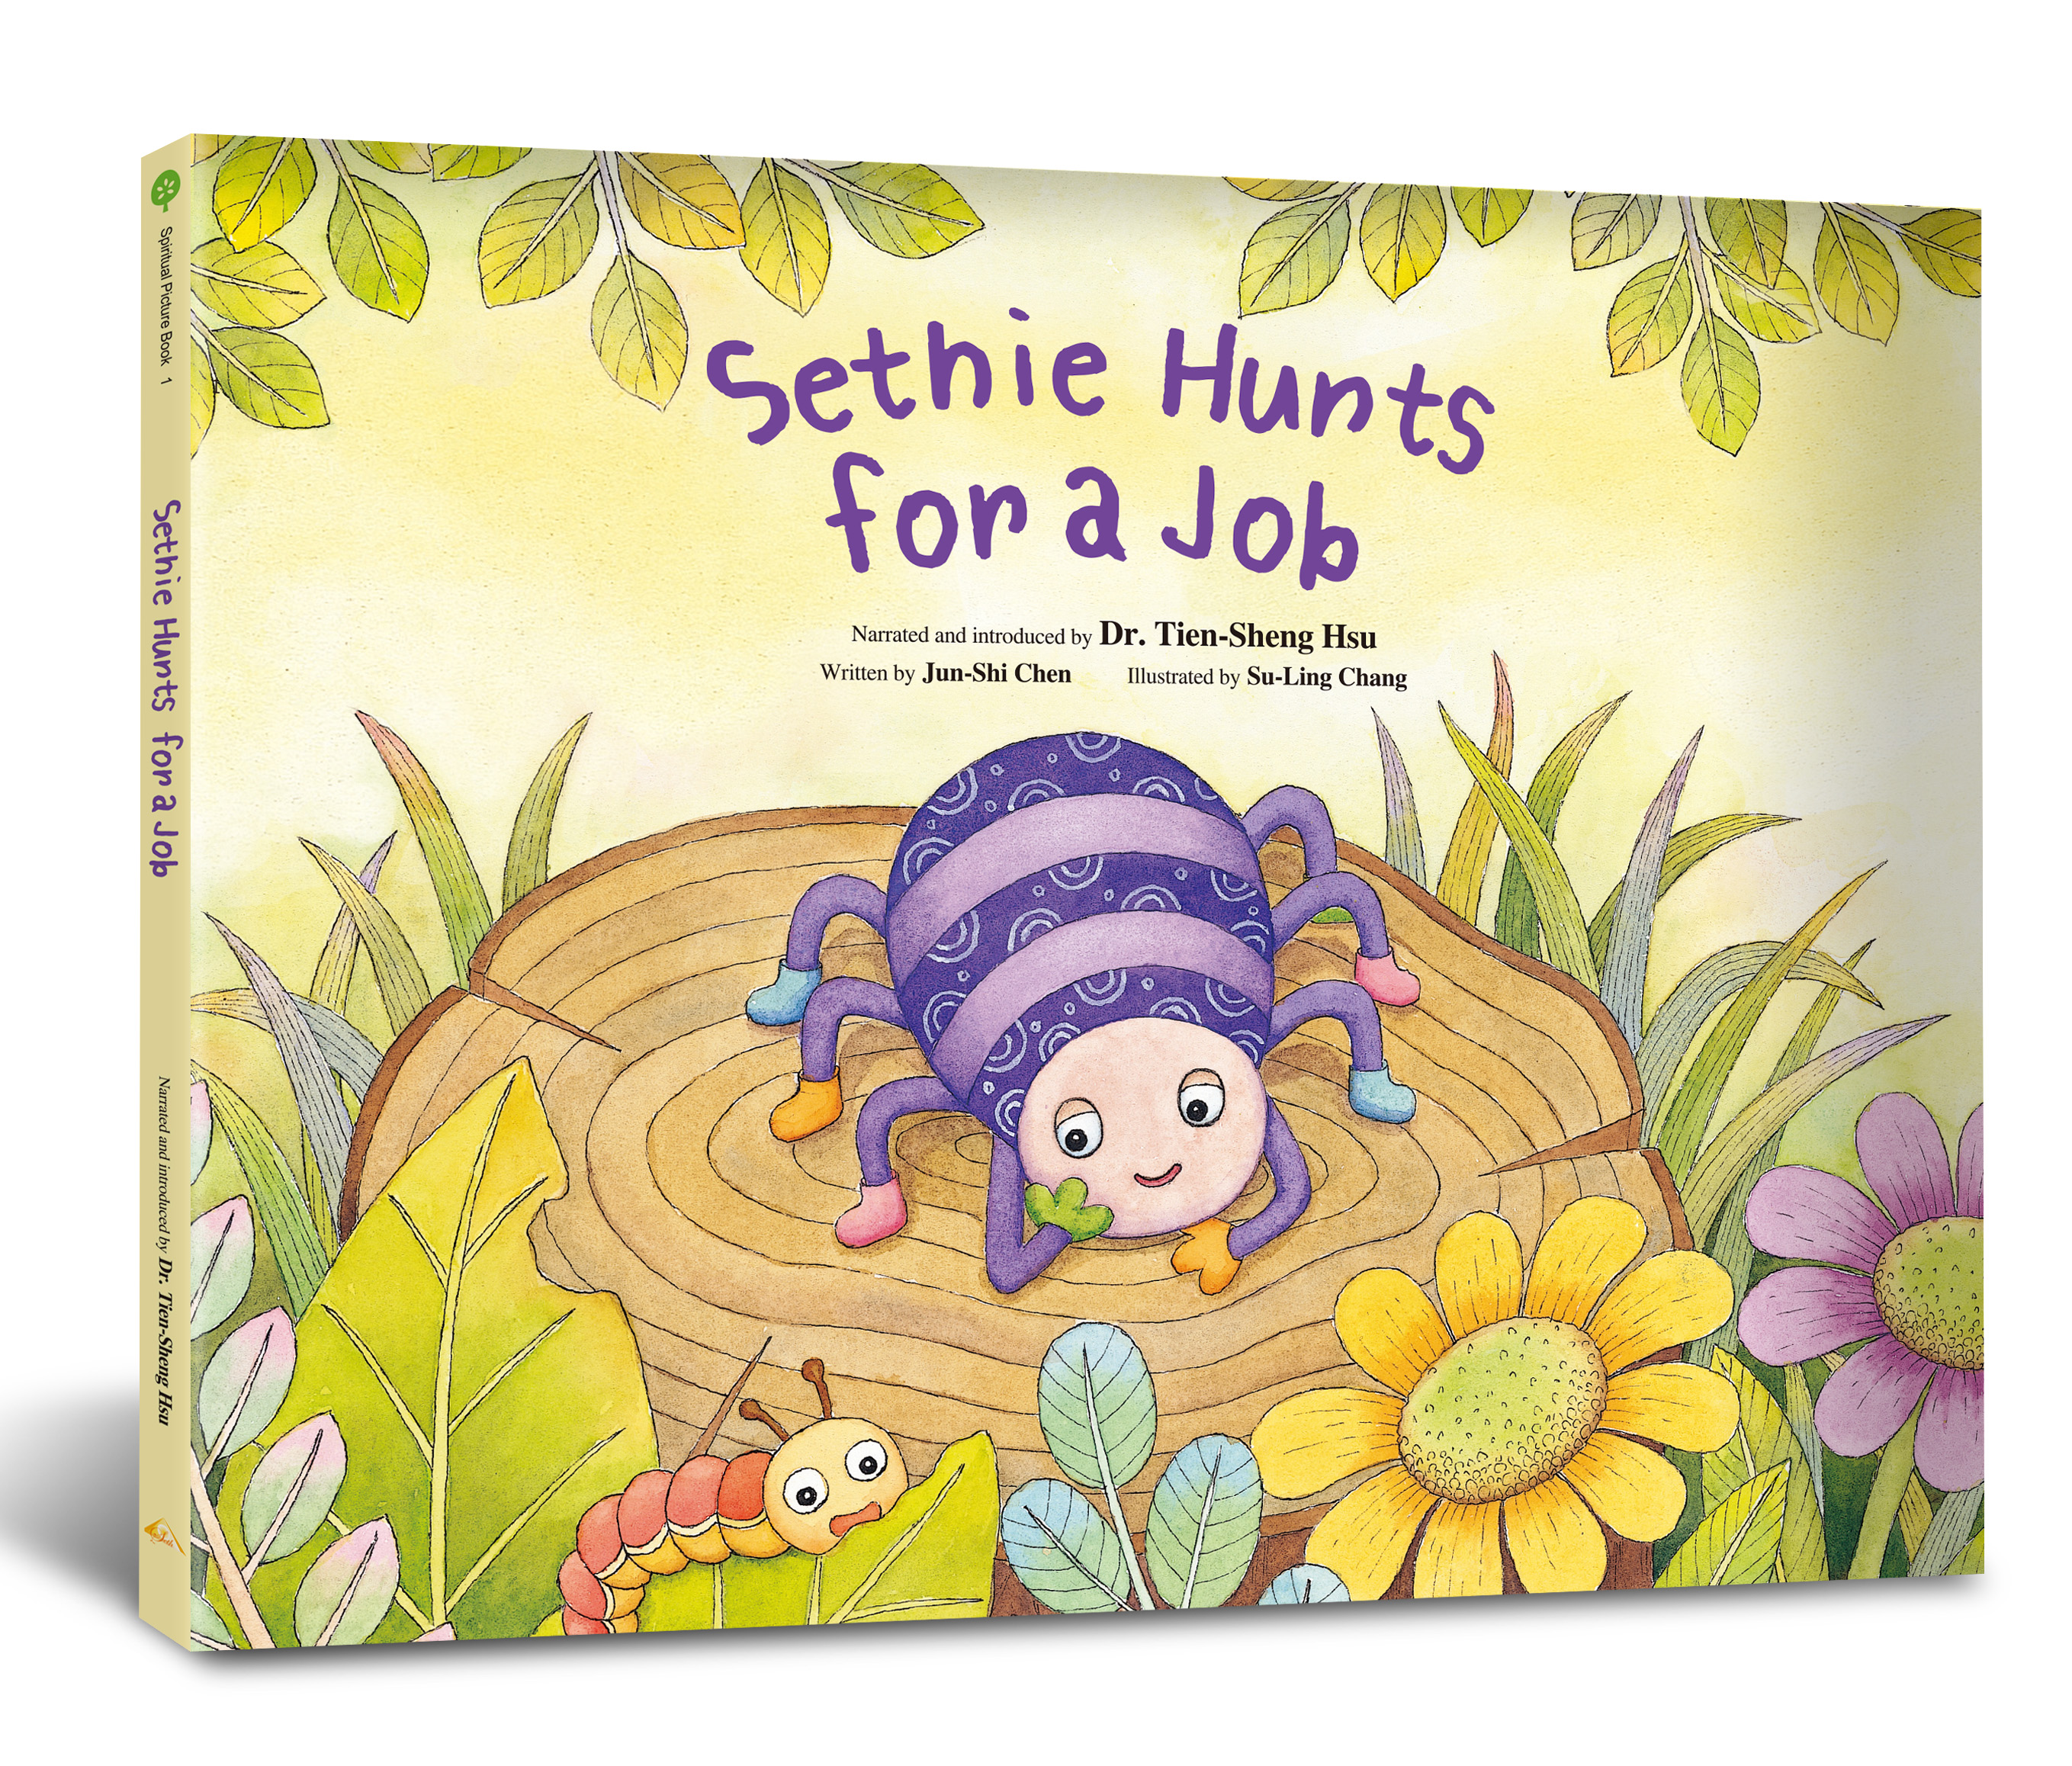 Sethie Hunts for a Job